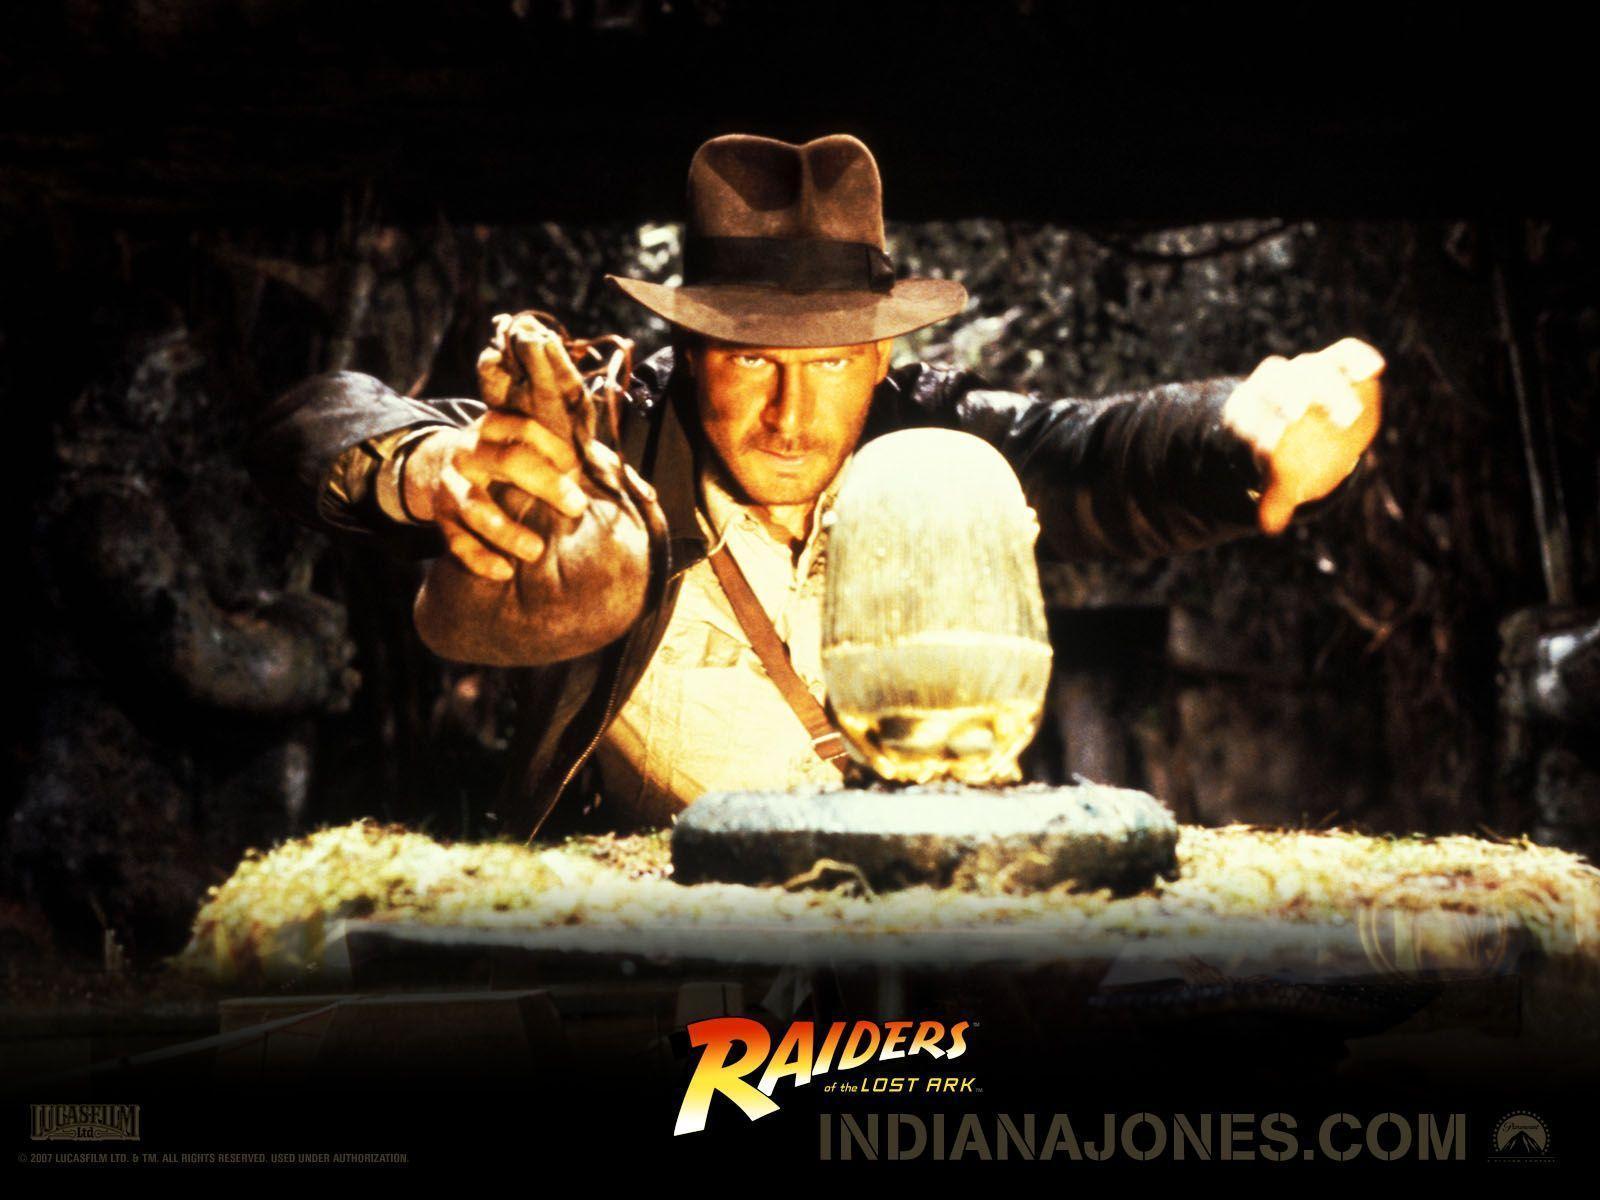 Indiana Jones Wallpaper Raiders of the Lost Ark 2K wallpapers and